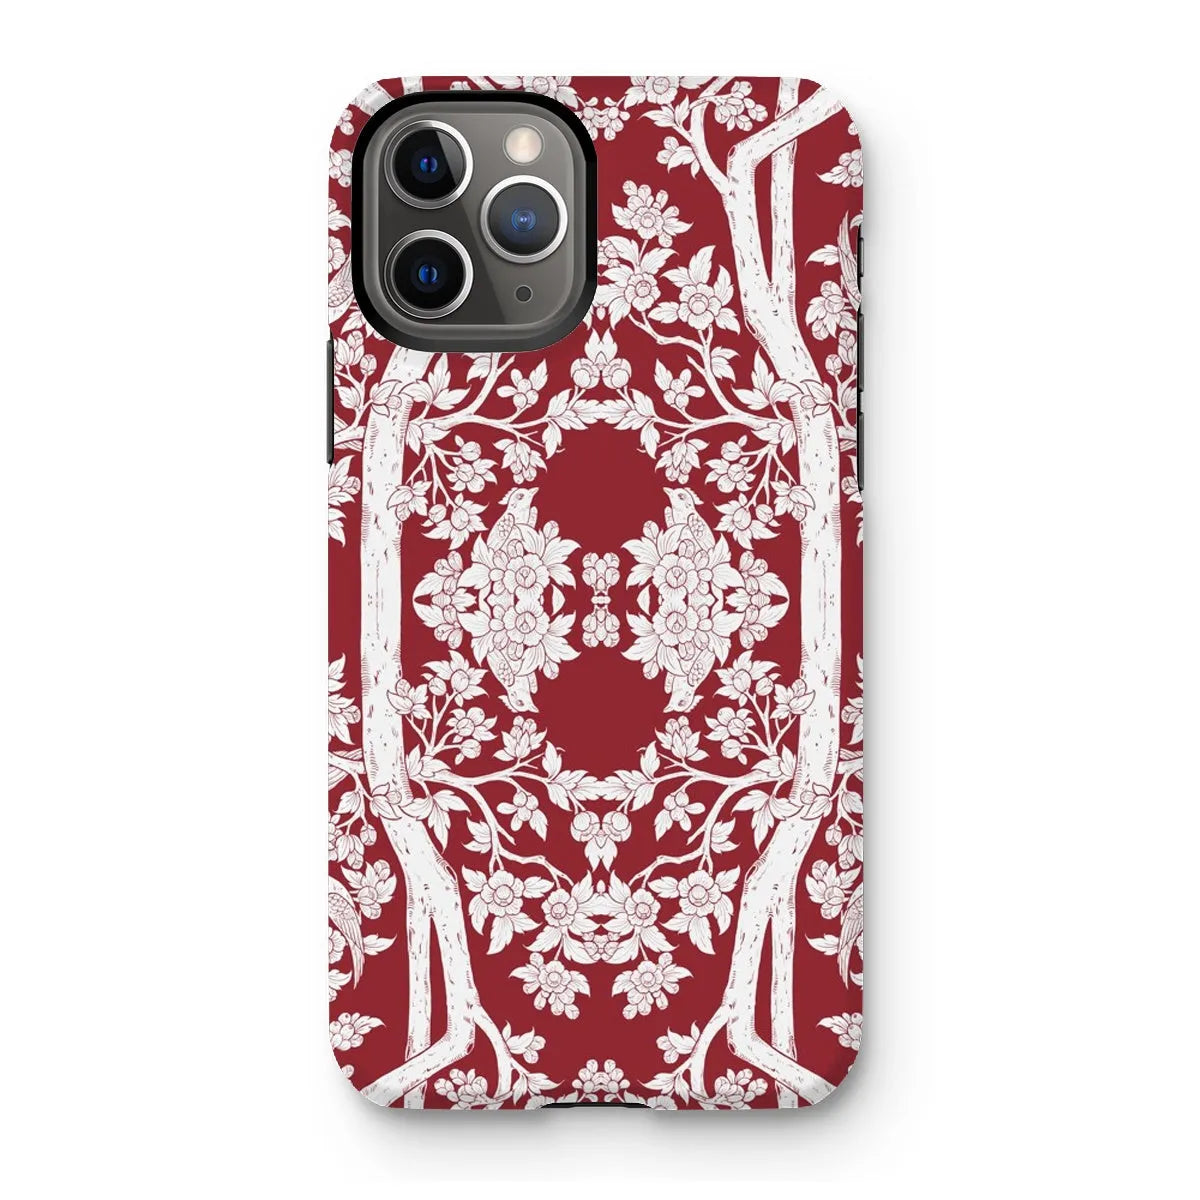 Aviary Red Aesthetic Pattern Art Phone Case - Iphone 11 Pro / Matte - Mobile Phone Cases - Aesthetic Art